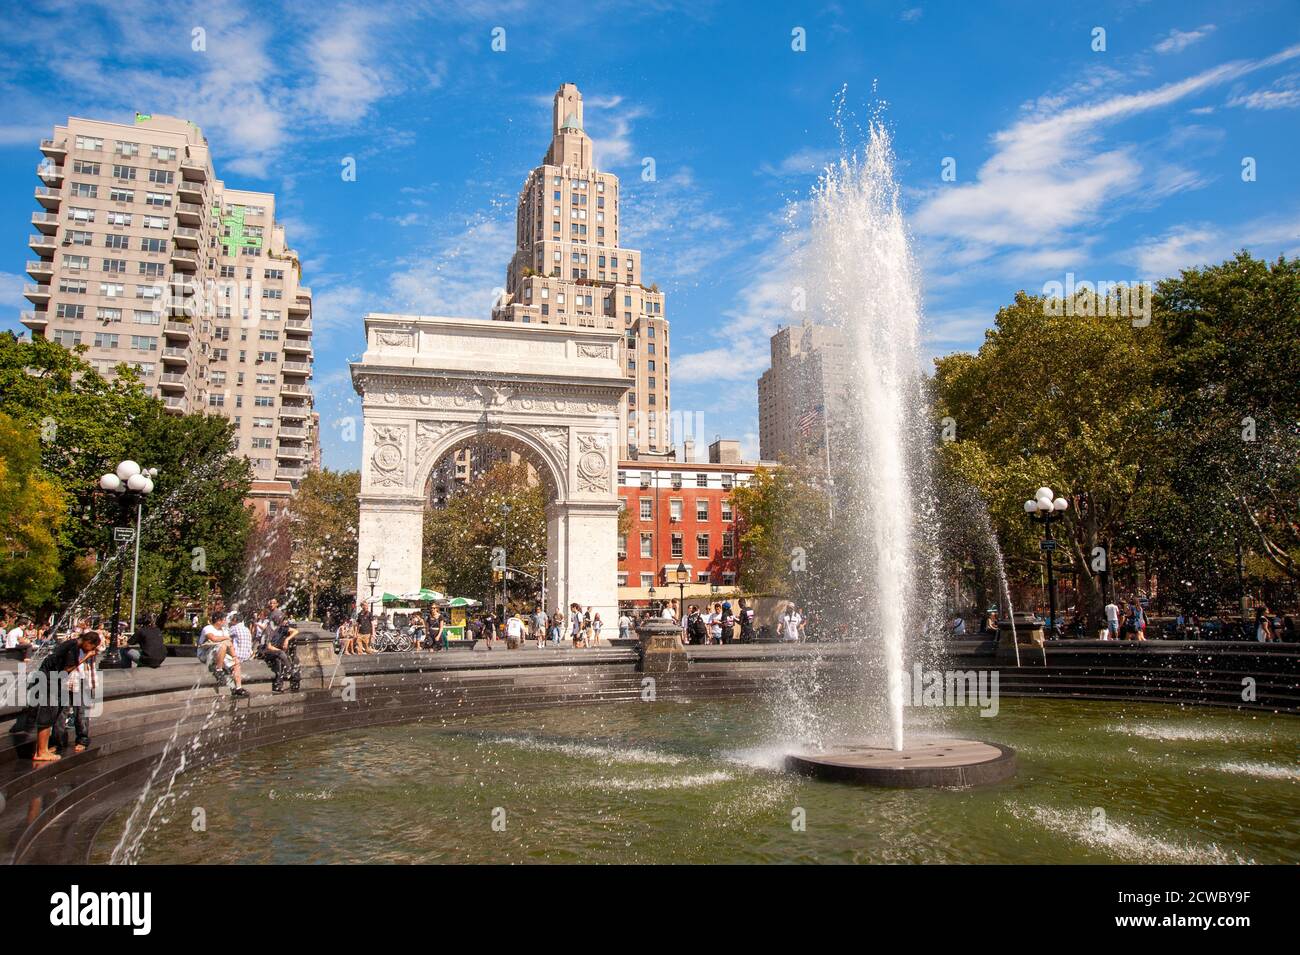 Washington Square Park, New York City, USA Stock Photo